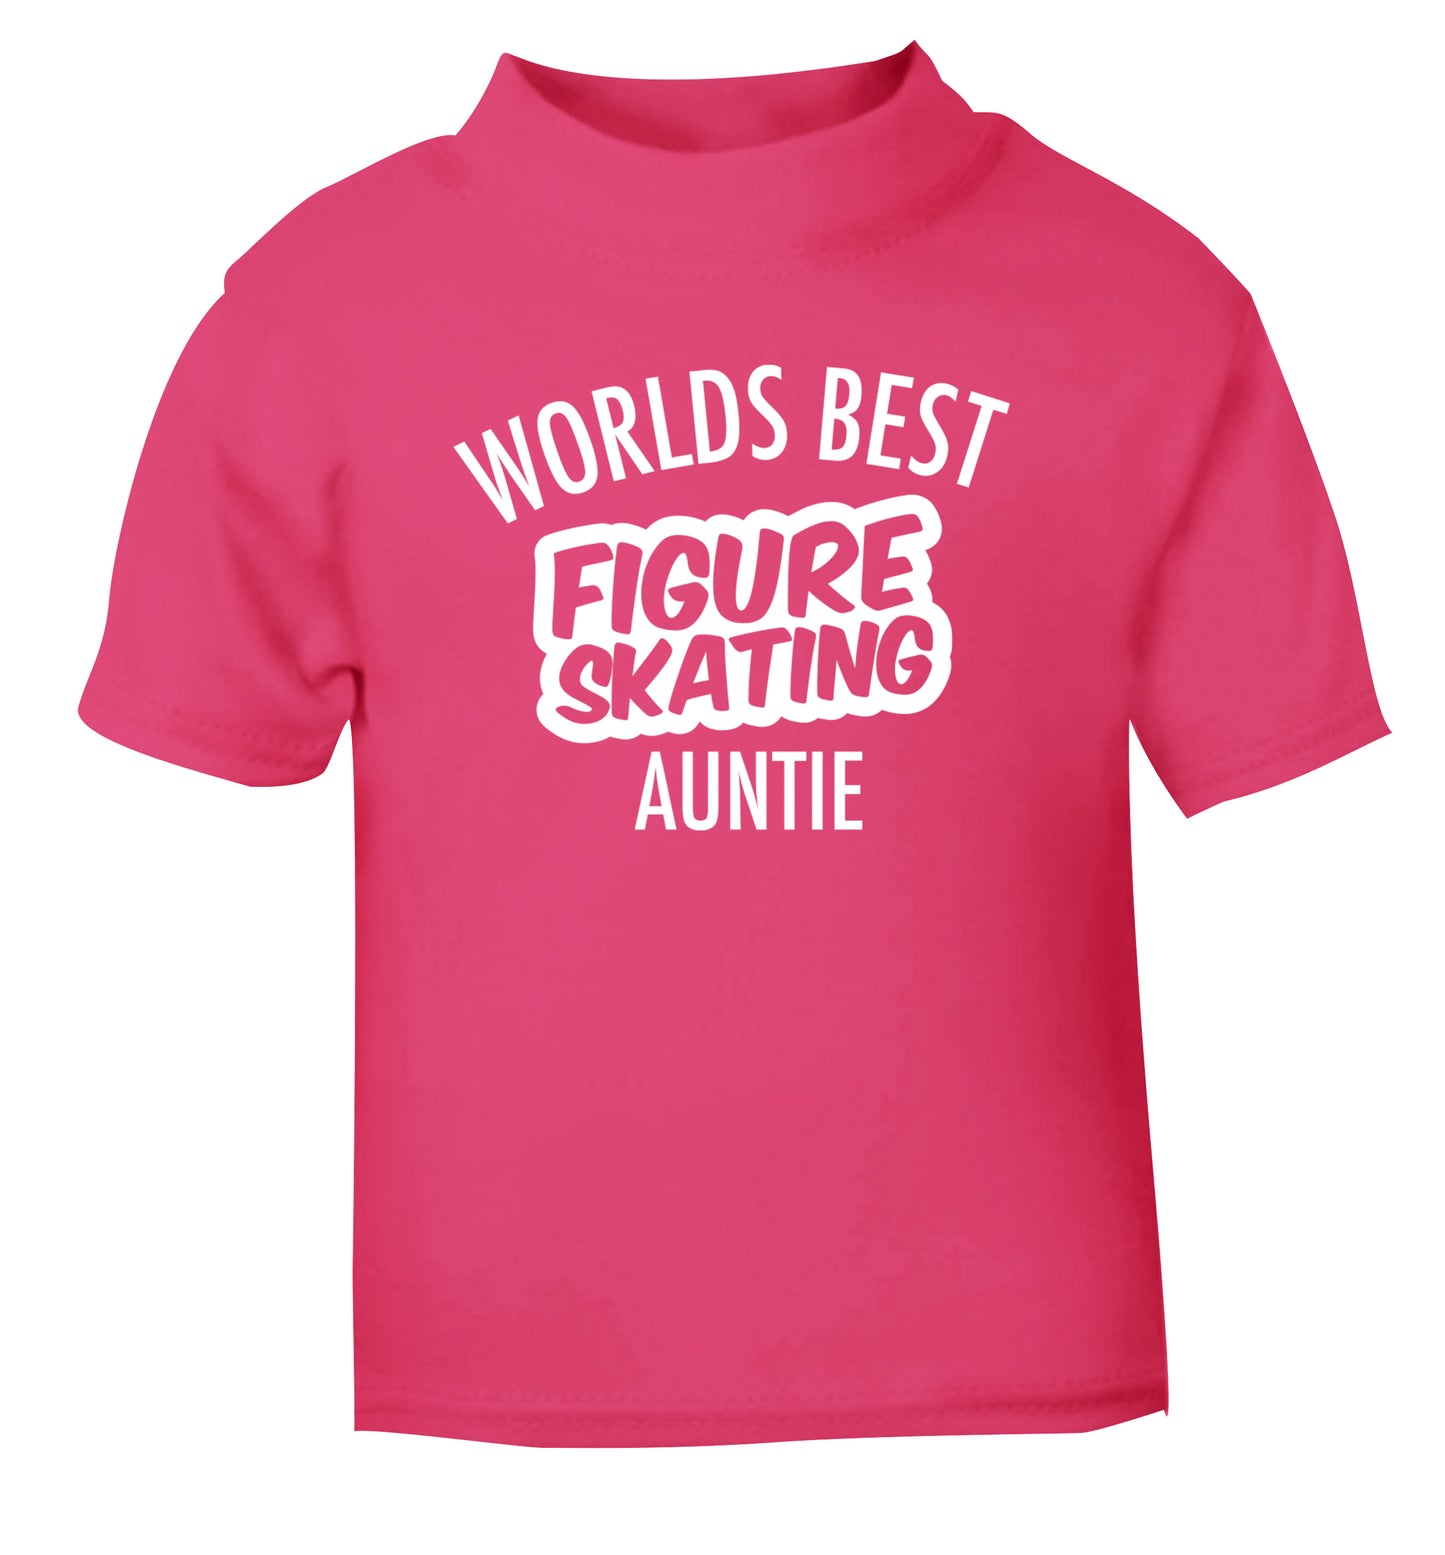 Worlds best figure skating auntie pink Baby Toddler Tshirt 2 Years